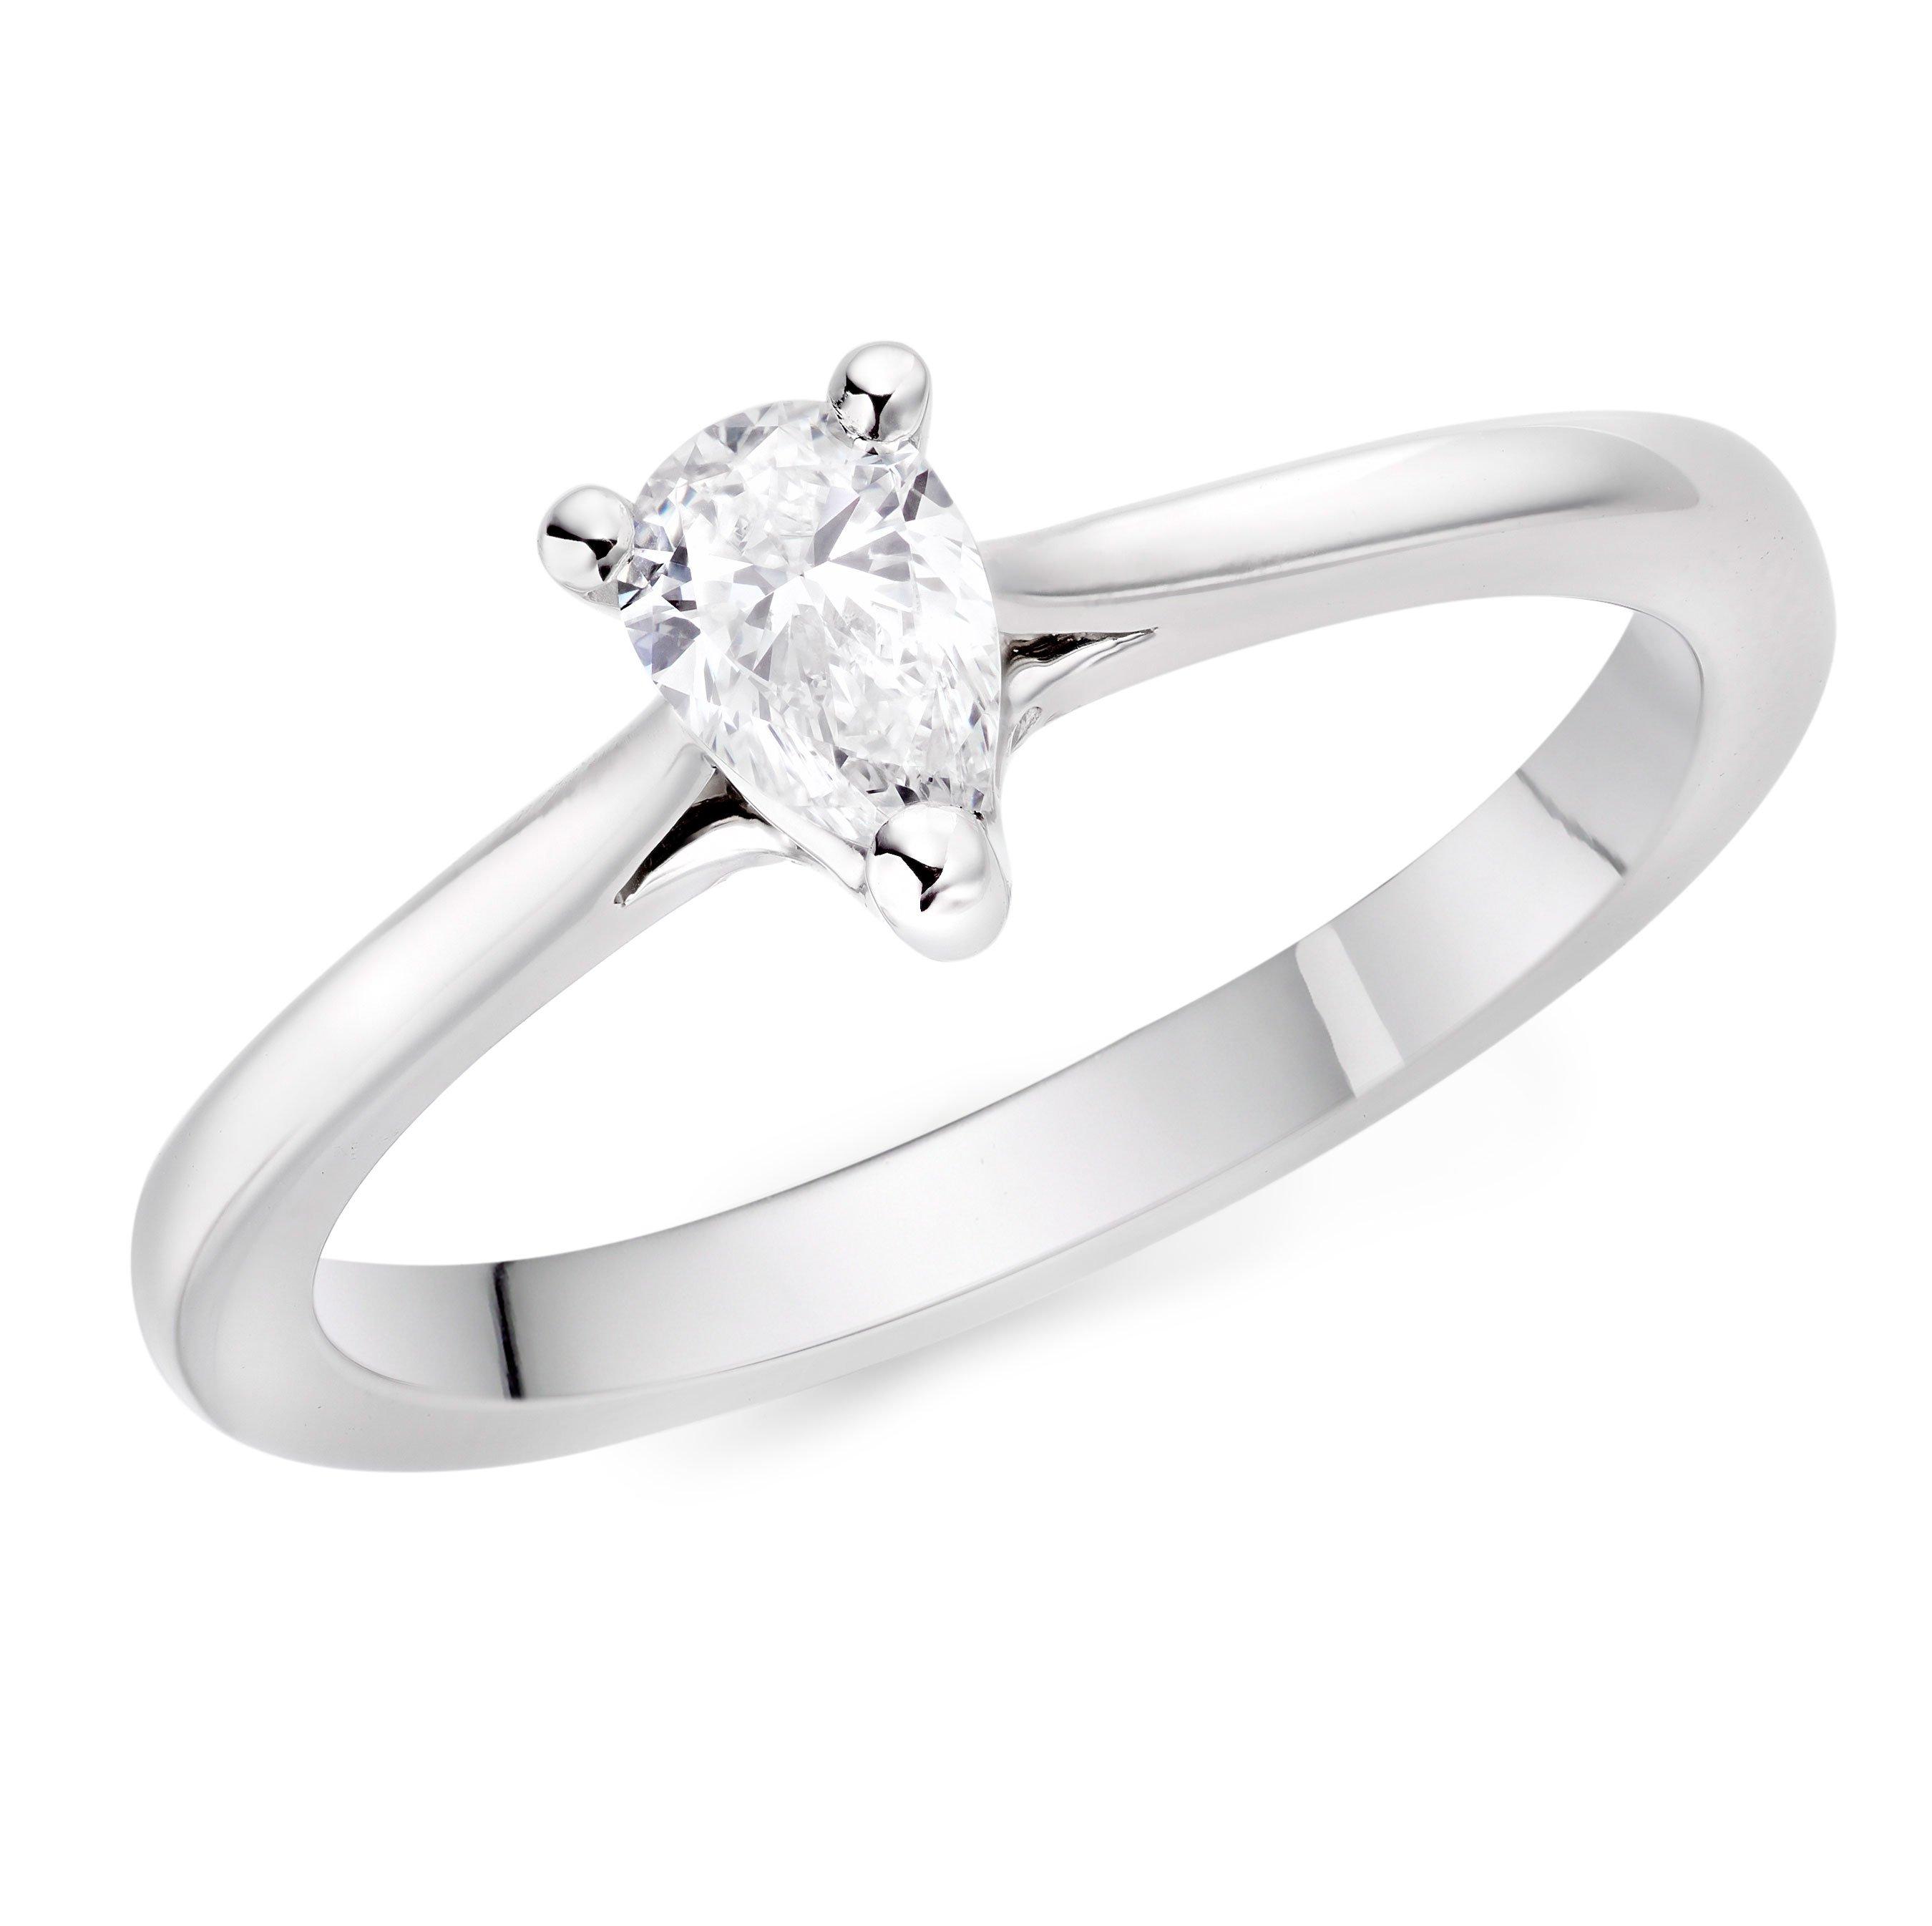 18ct White Gold Diamond Eternity Ring | 0005290 | Beaverbrooks the ...